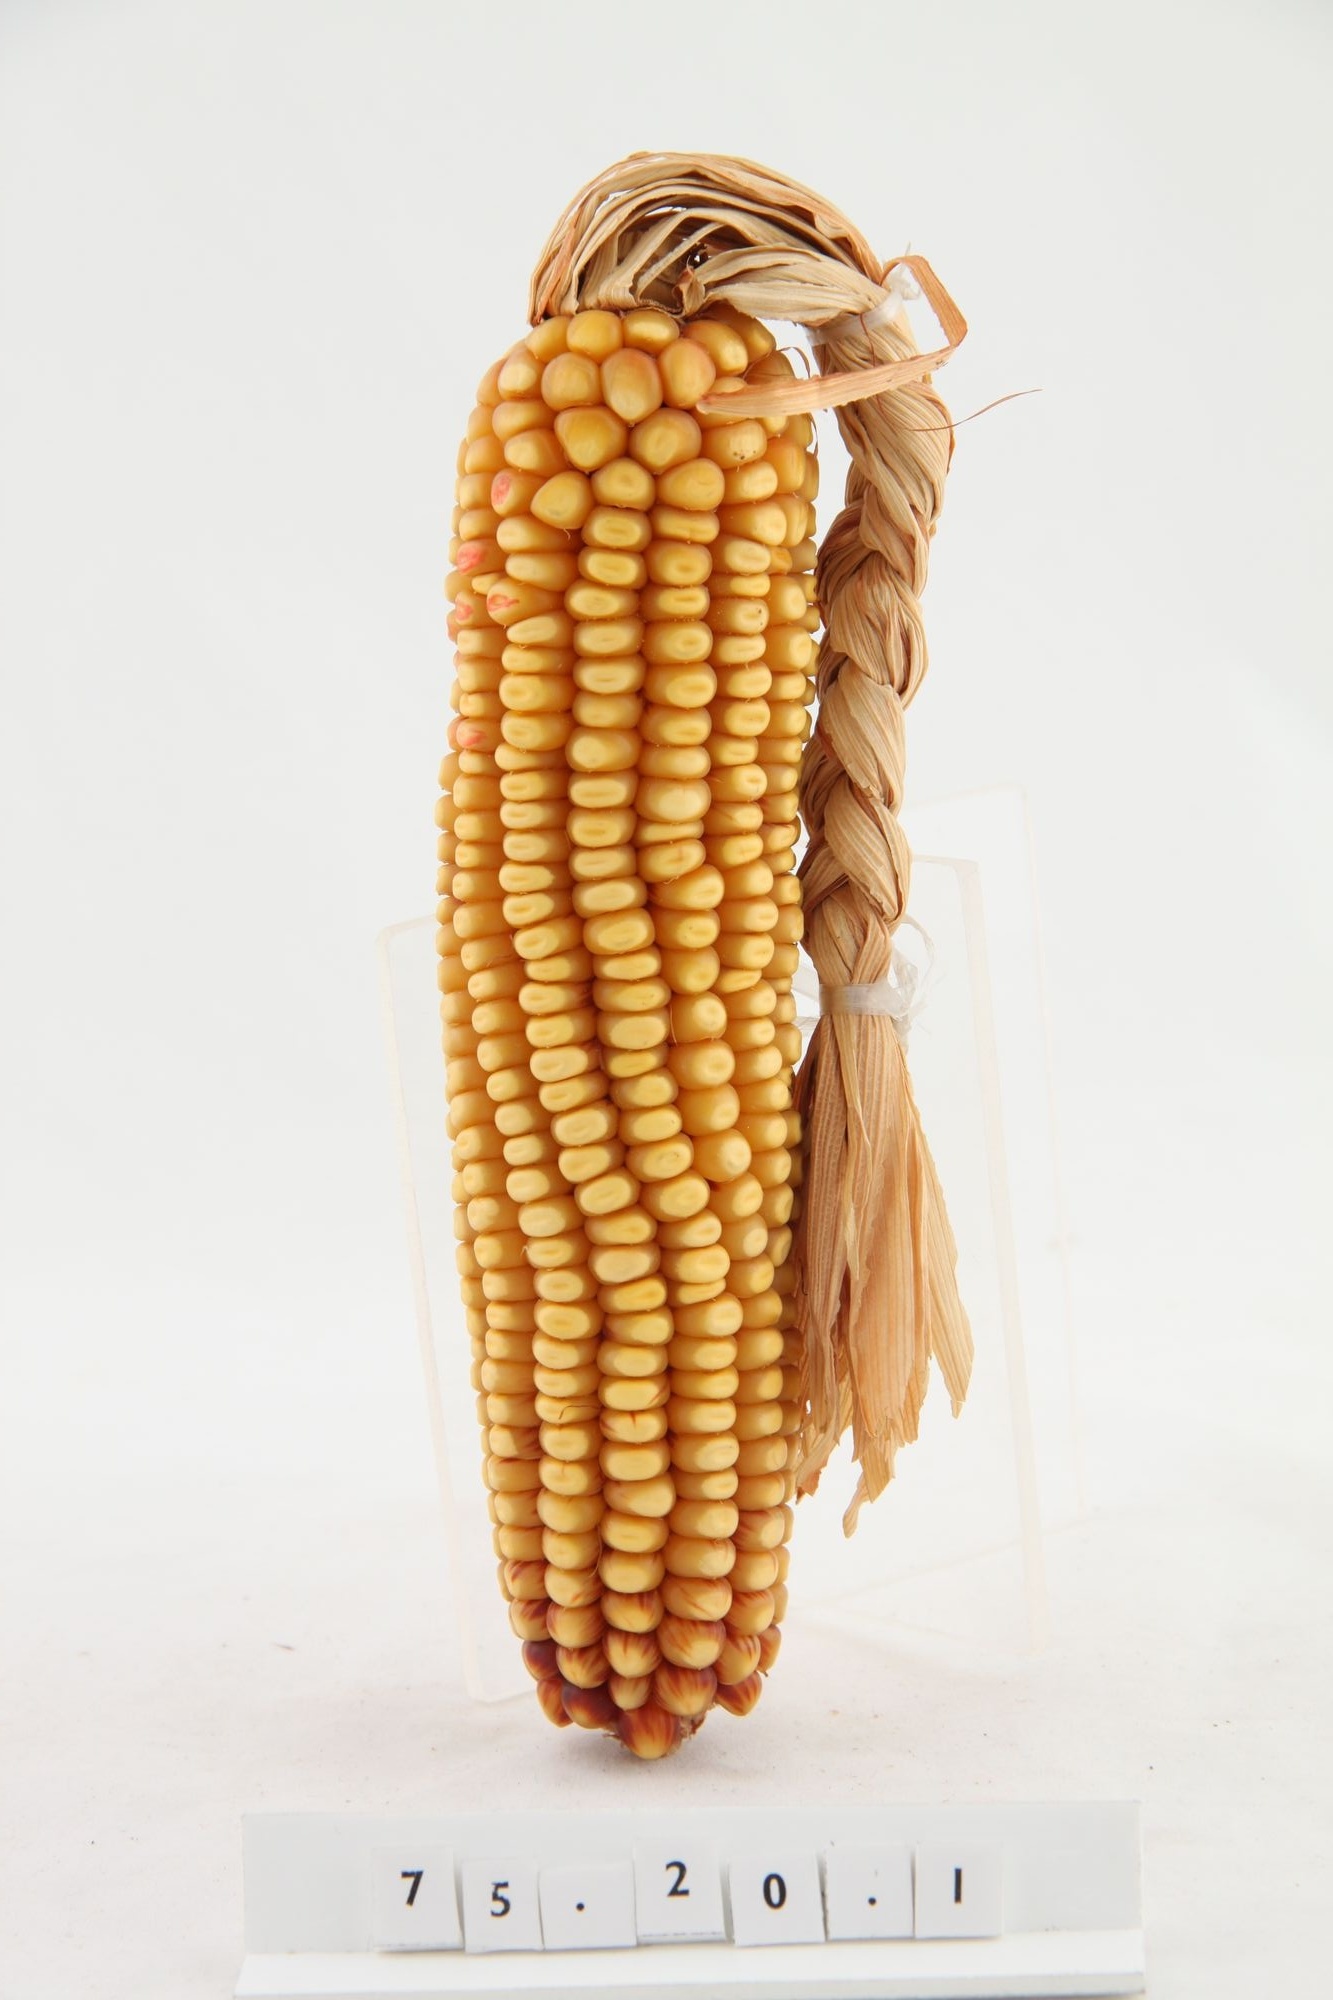 Kukoricababa "leány" (Rippl-Rónai Múzeum CC BY-NC-SA)